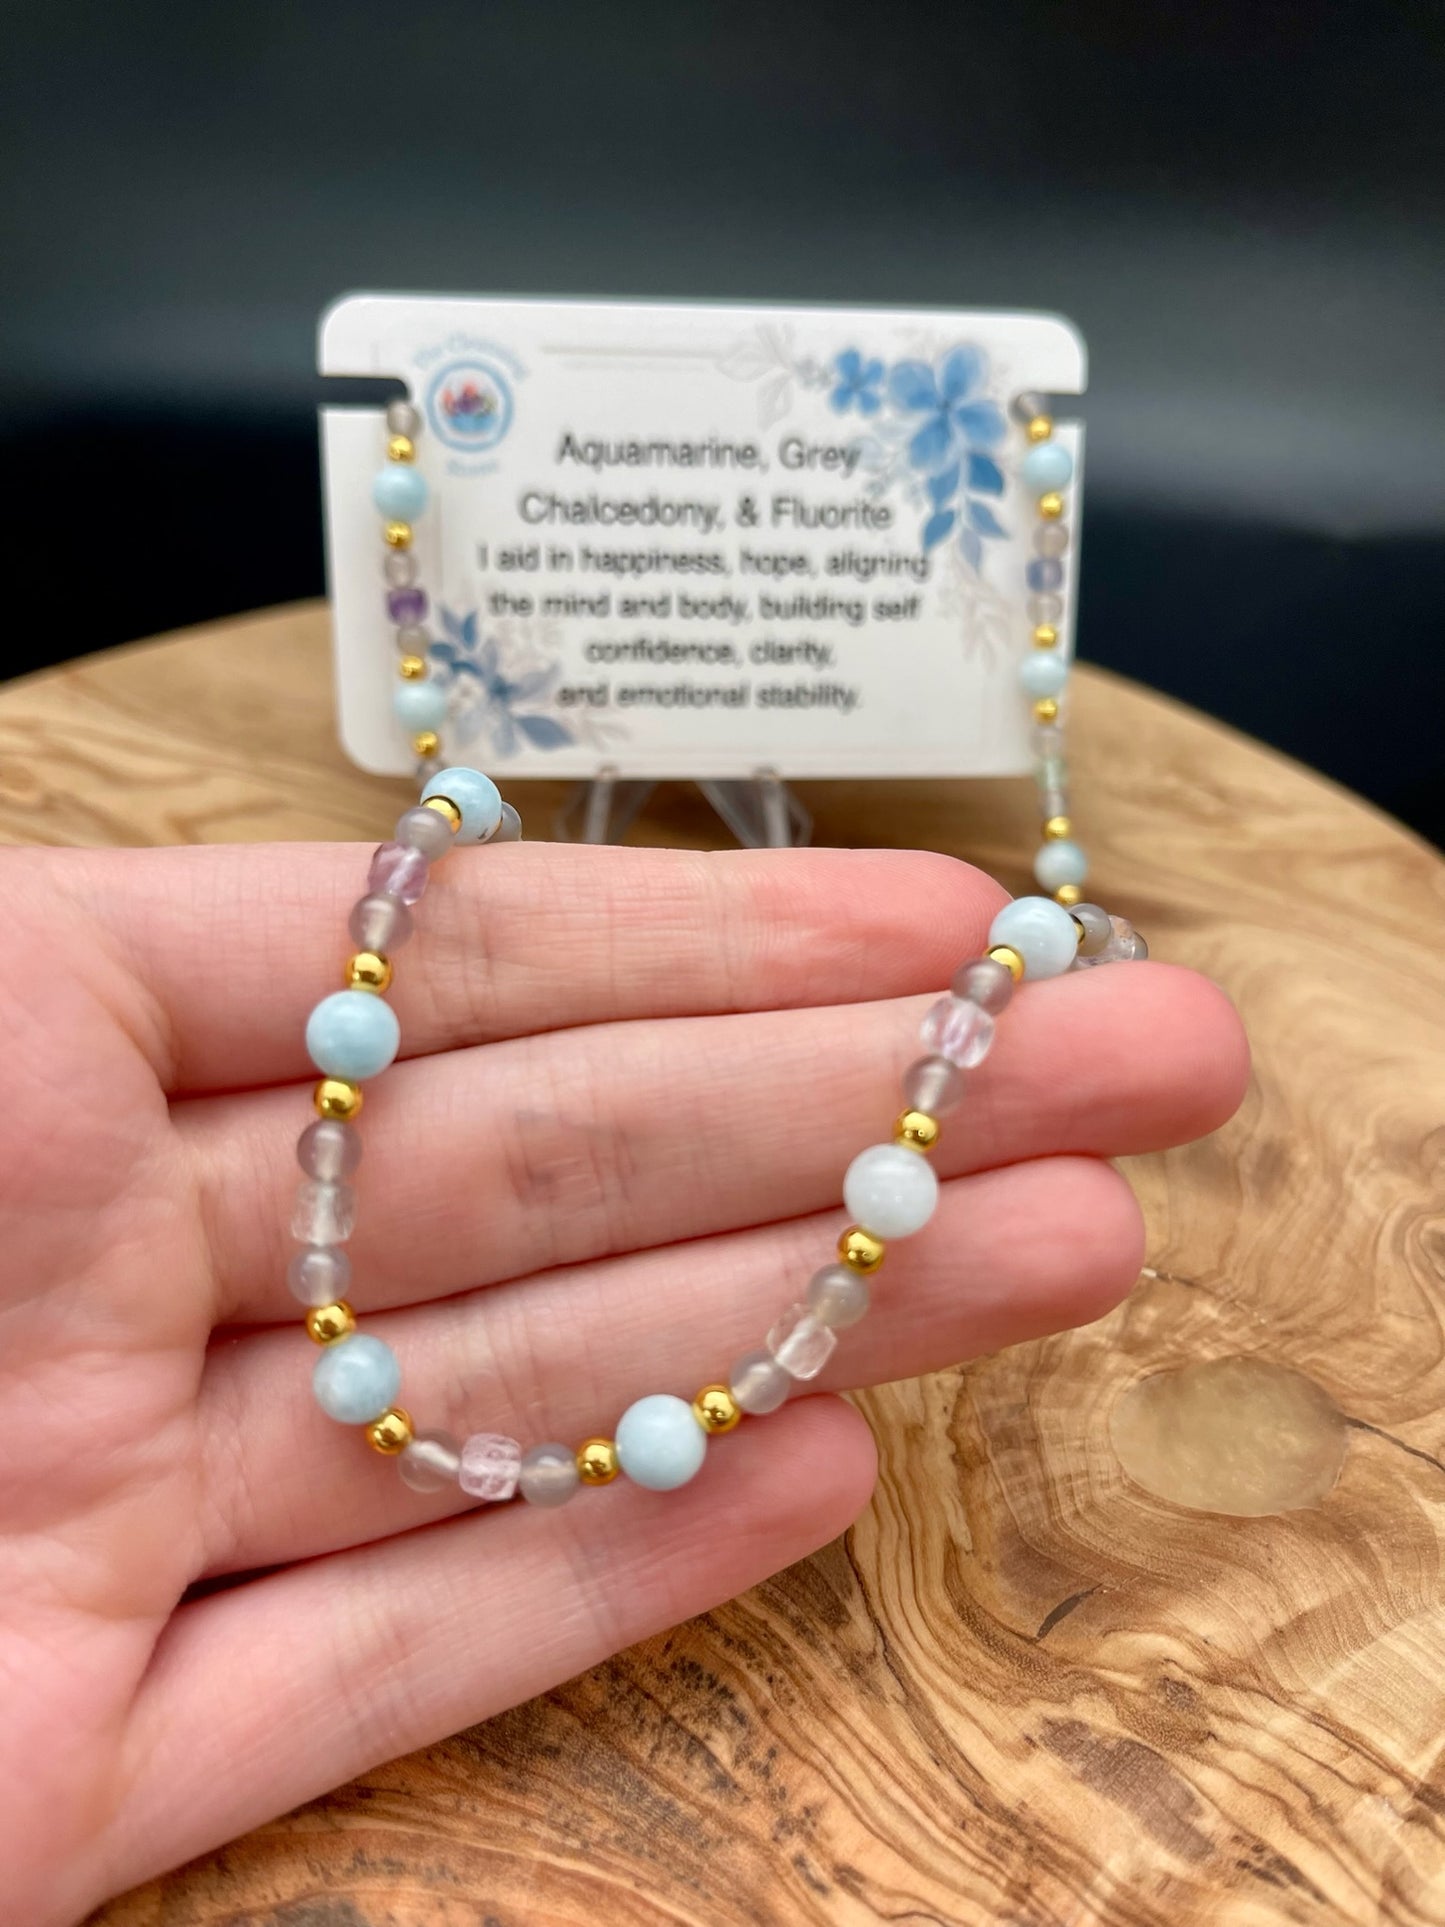 Aquamarine, Grey Chalcedony, and Fluorite Necklace